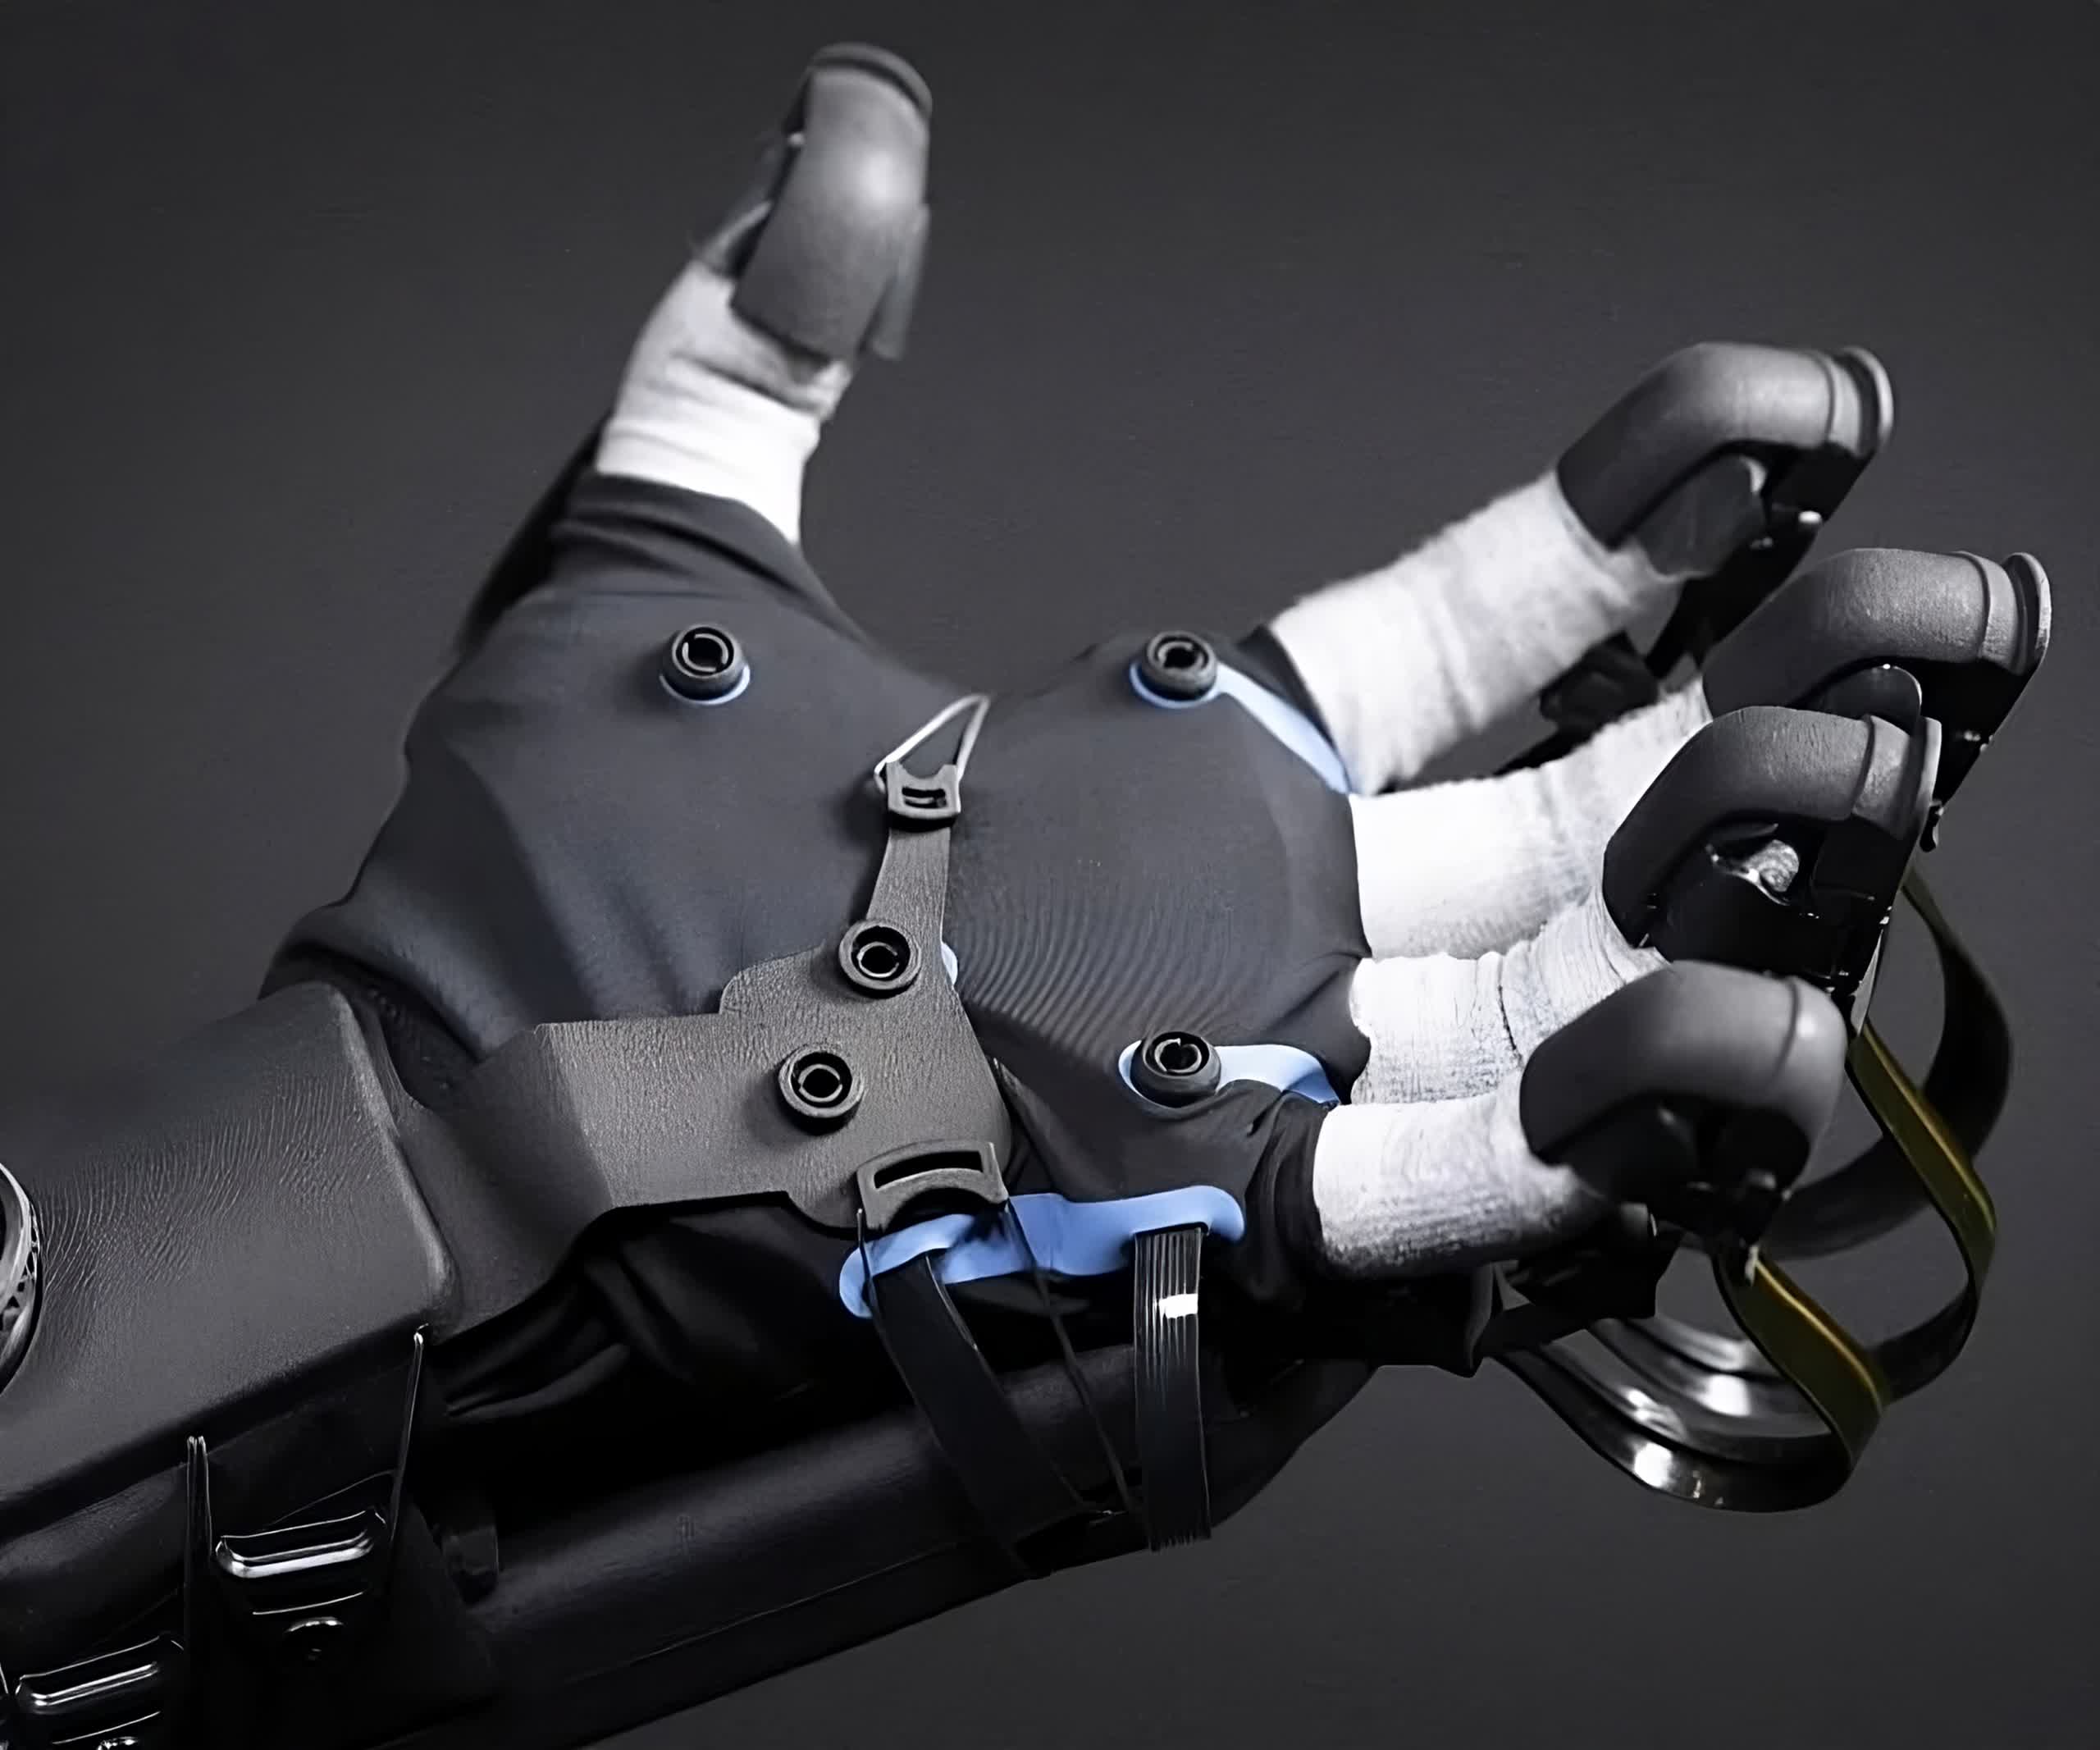 resize HaptX Gloves DK Close Up 720x600 1 jpg transformed